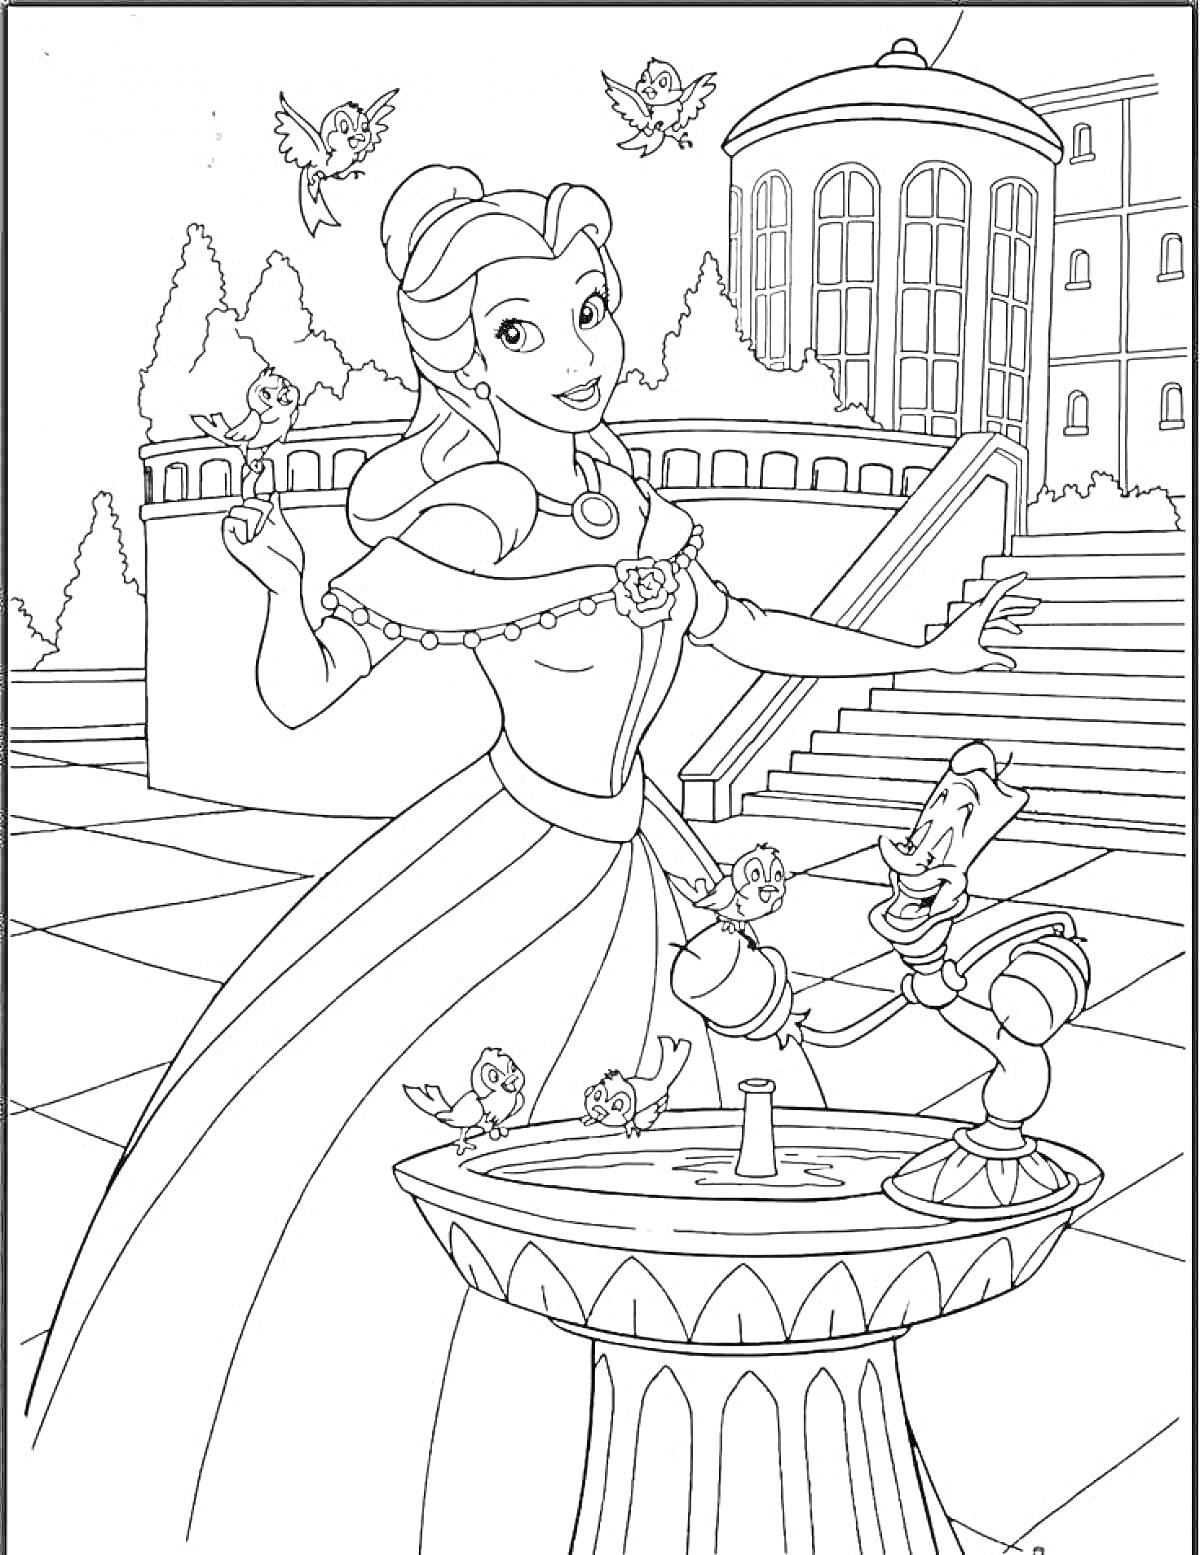 Раскраска Принцесса на фоне дворца, птиц и фонтанчика с ожившим канделябром